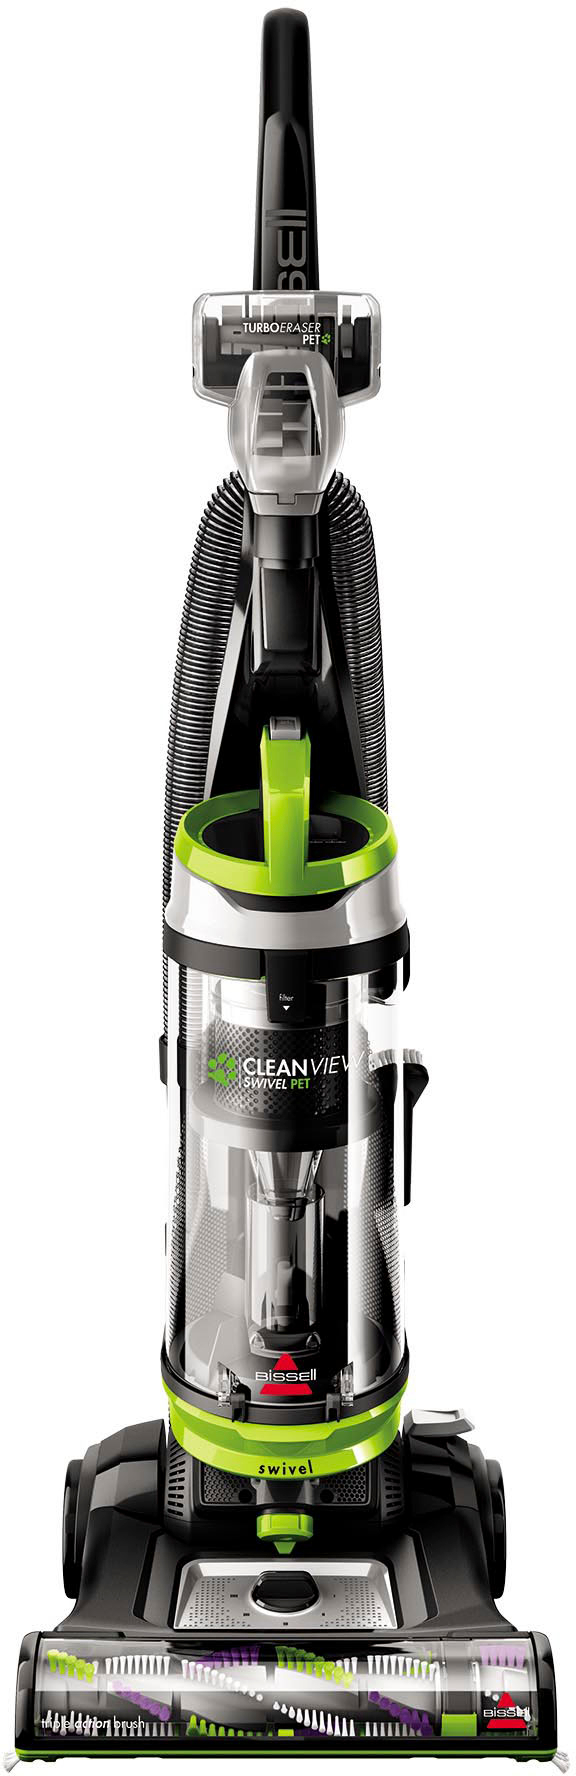 Bissell CleanView Swivel Pet Vacuum